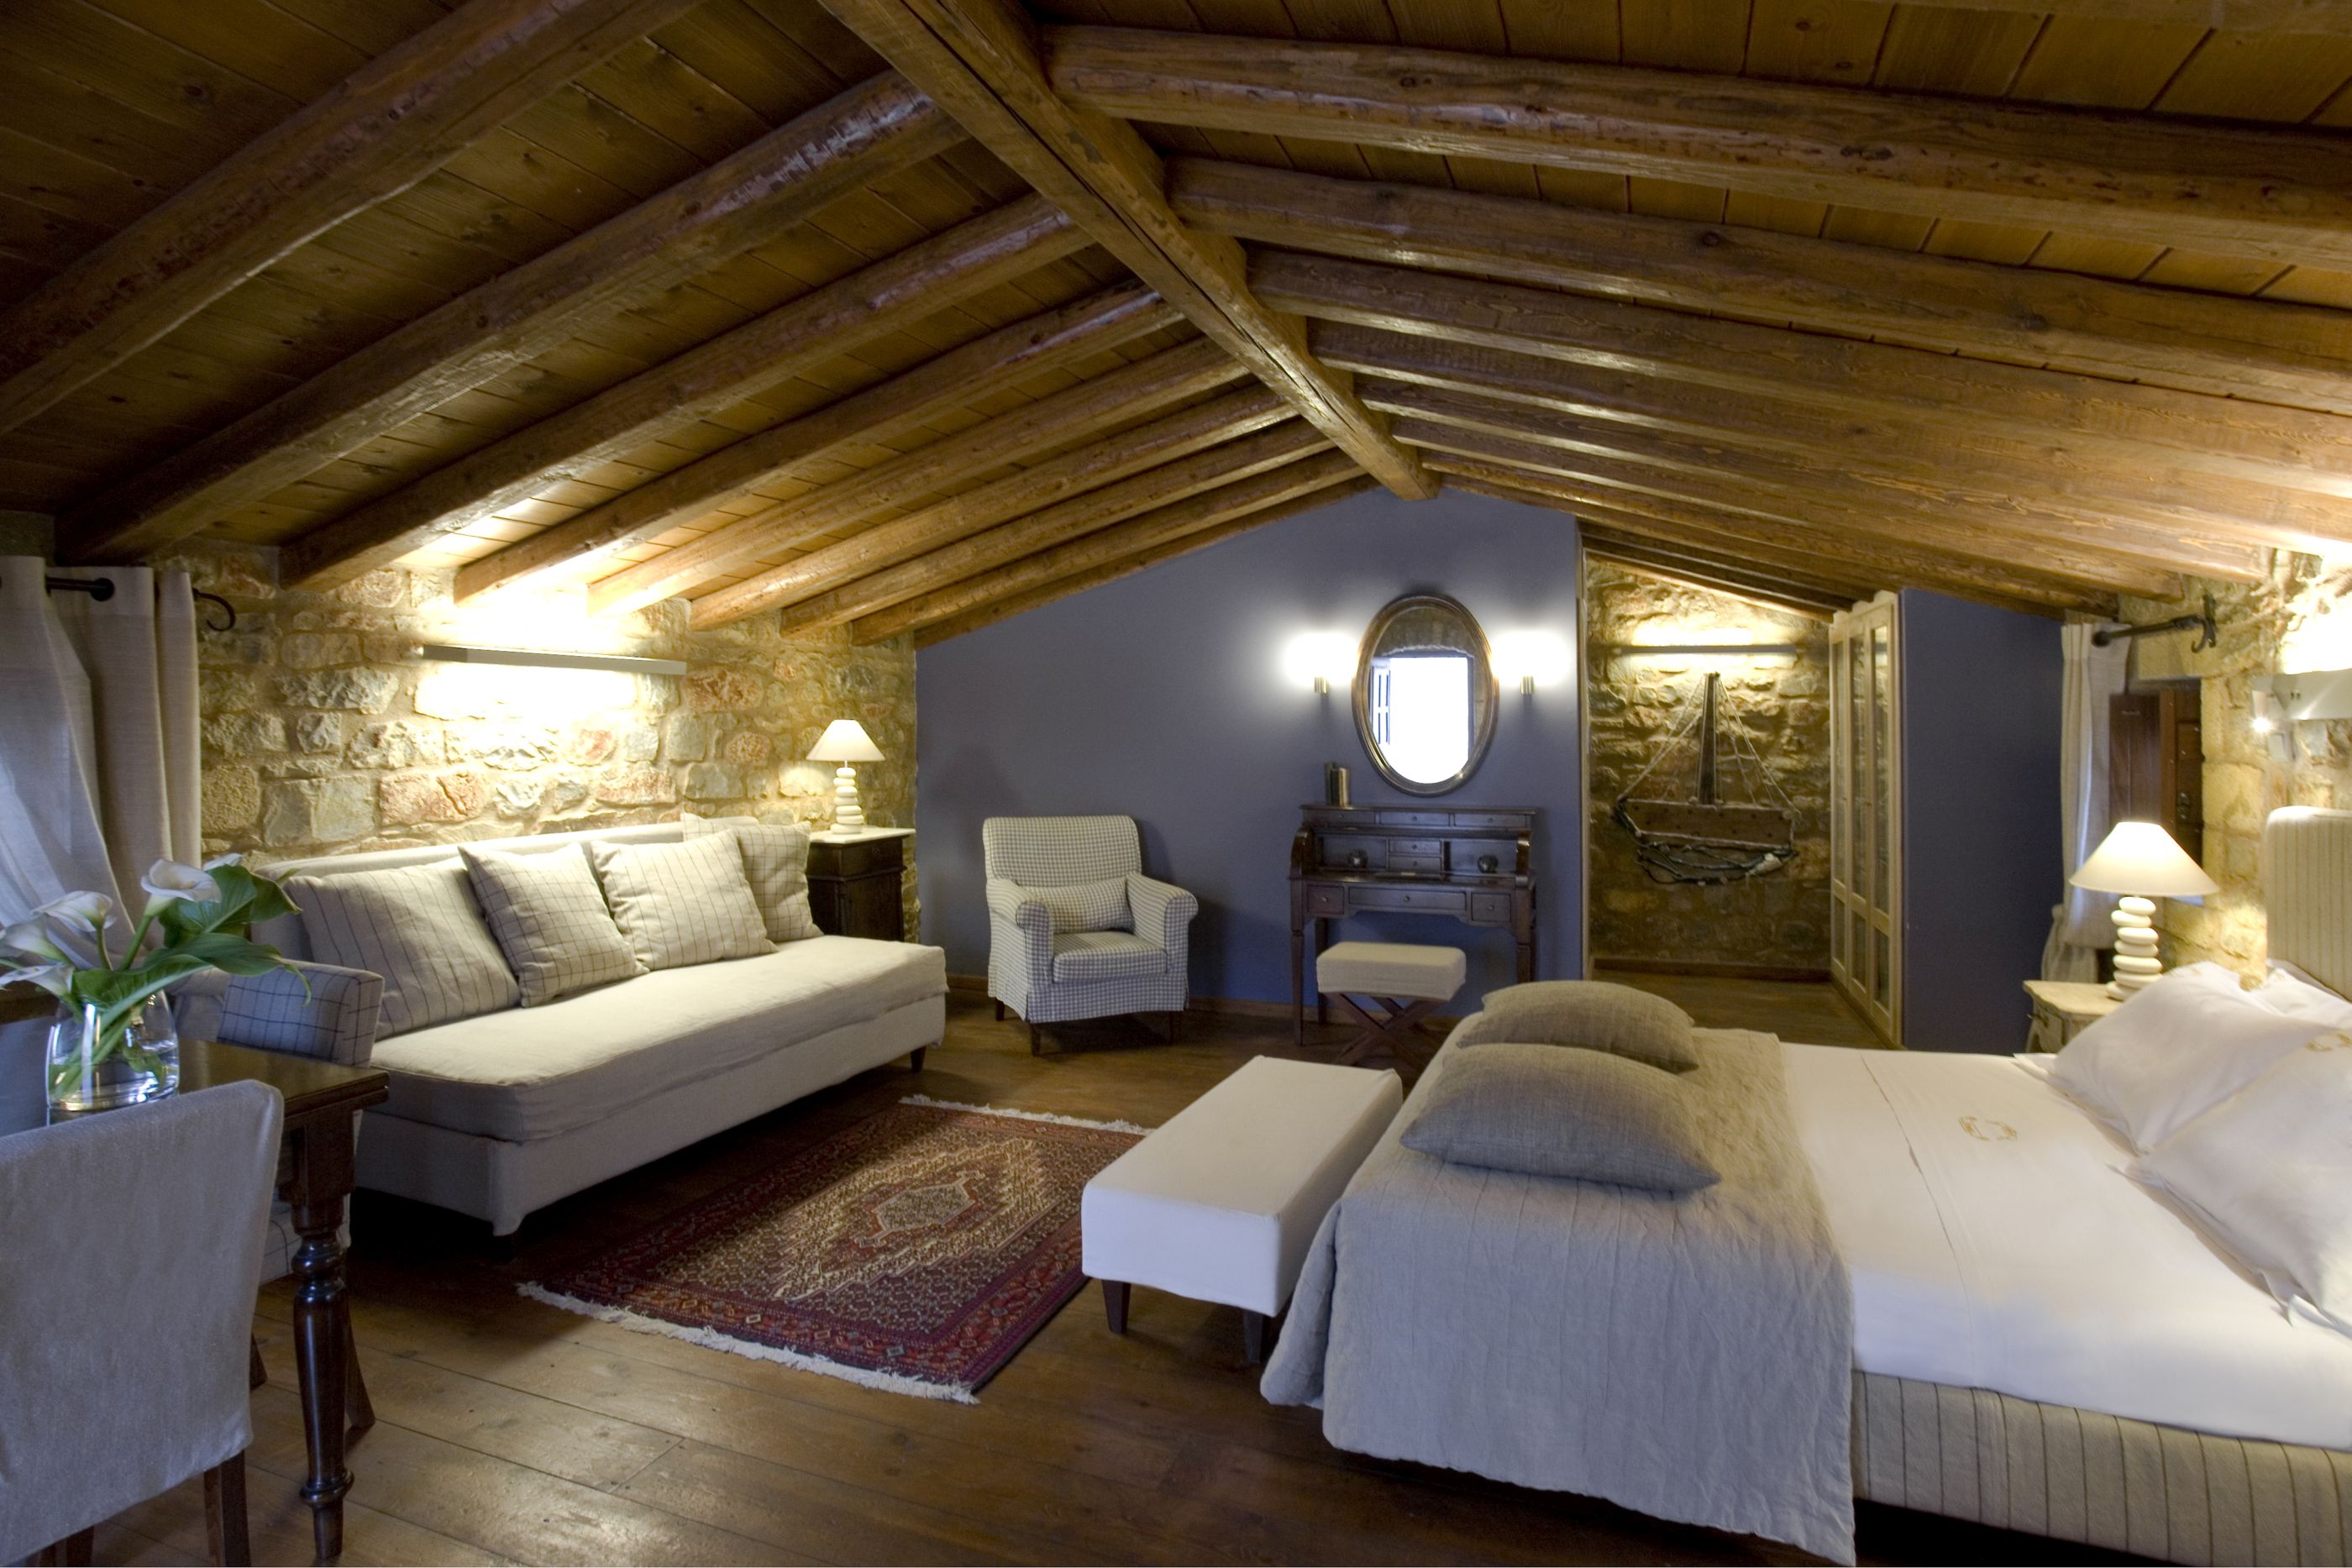 Interiors of a loft at Kyrimai, Greece